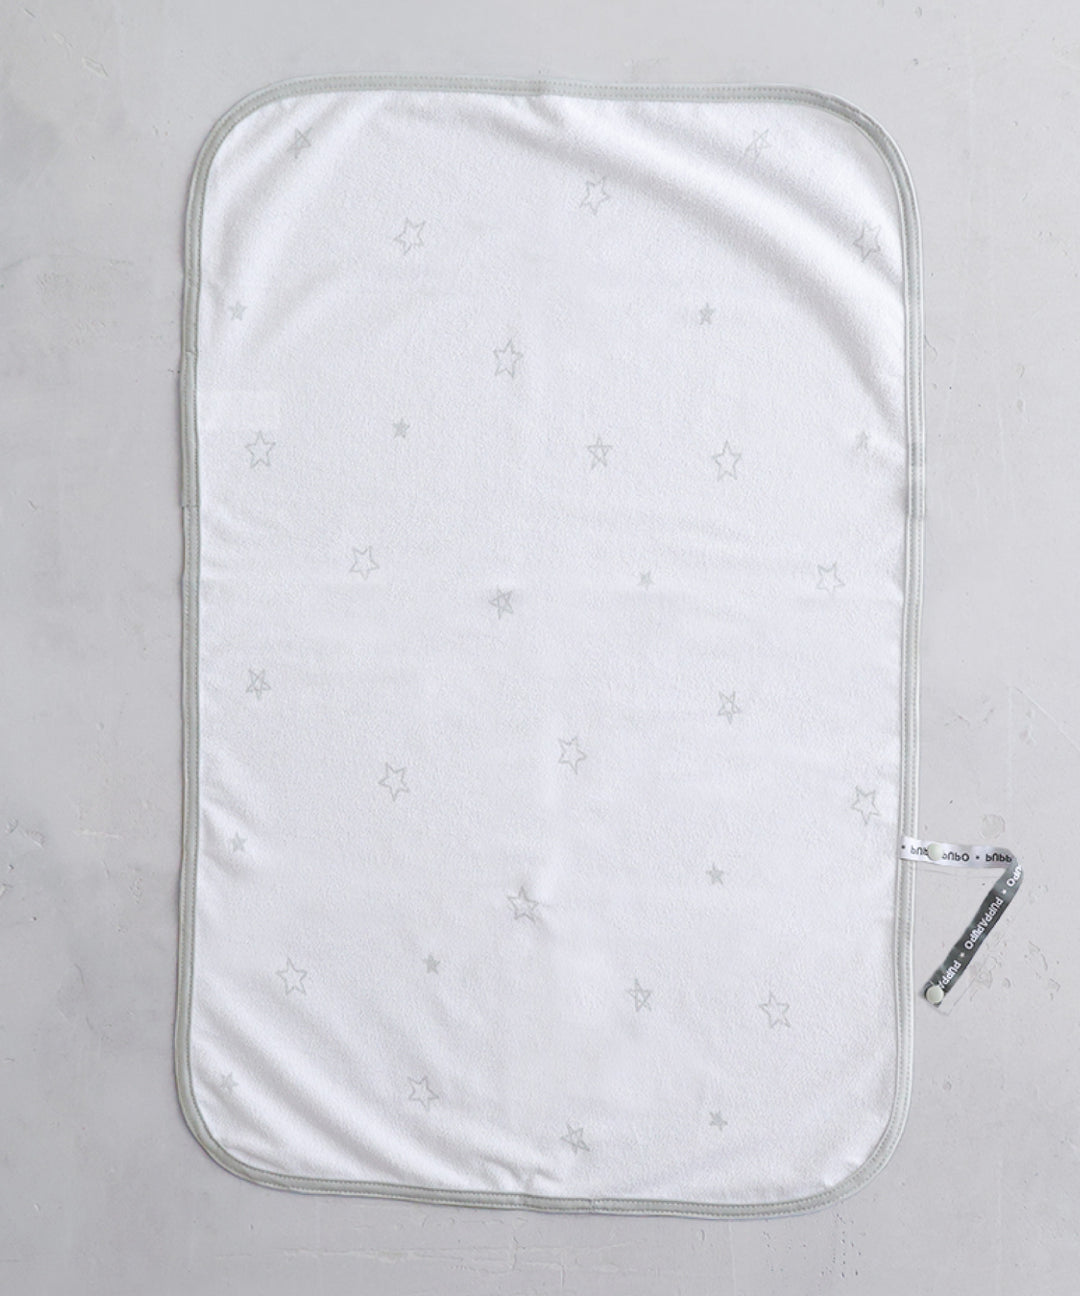 Diaper Changing Mat 17.7″ x 27.6″ (Pile Fabric)